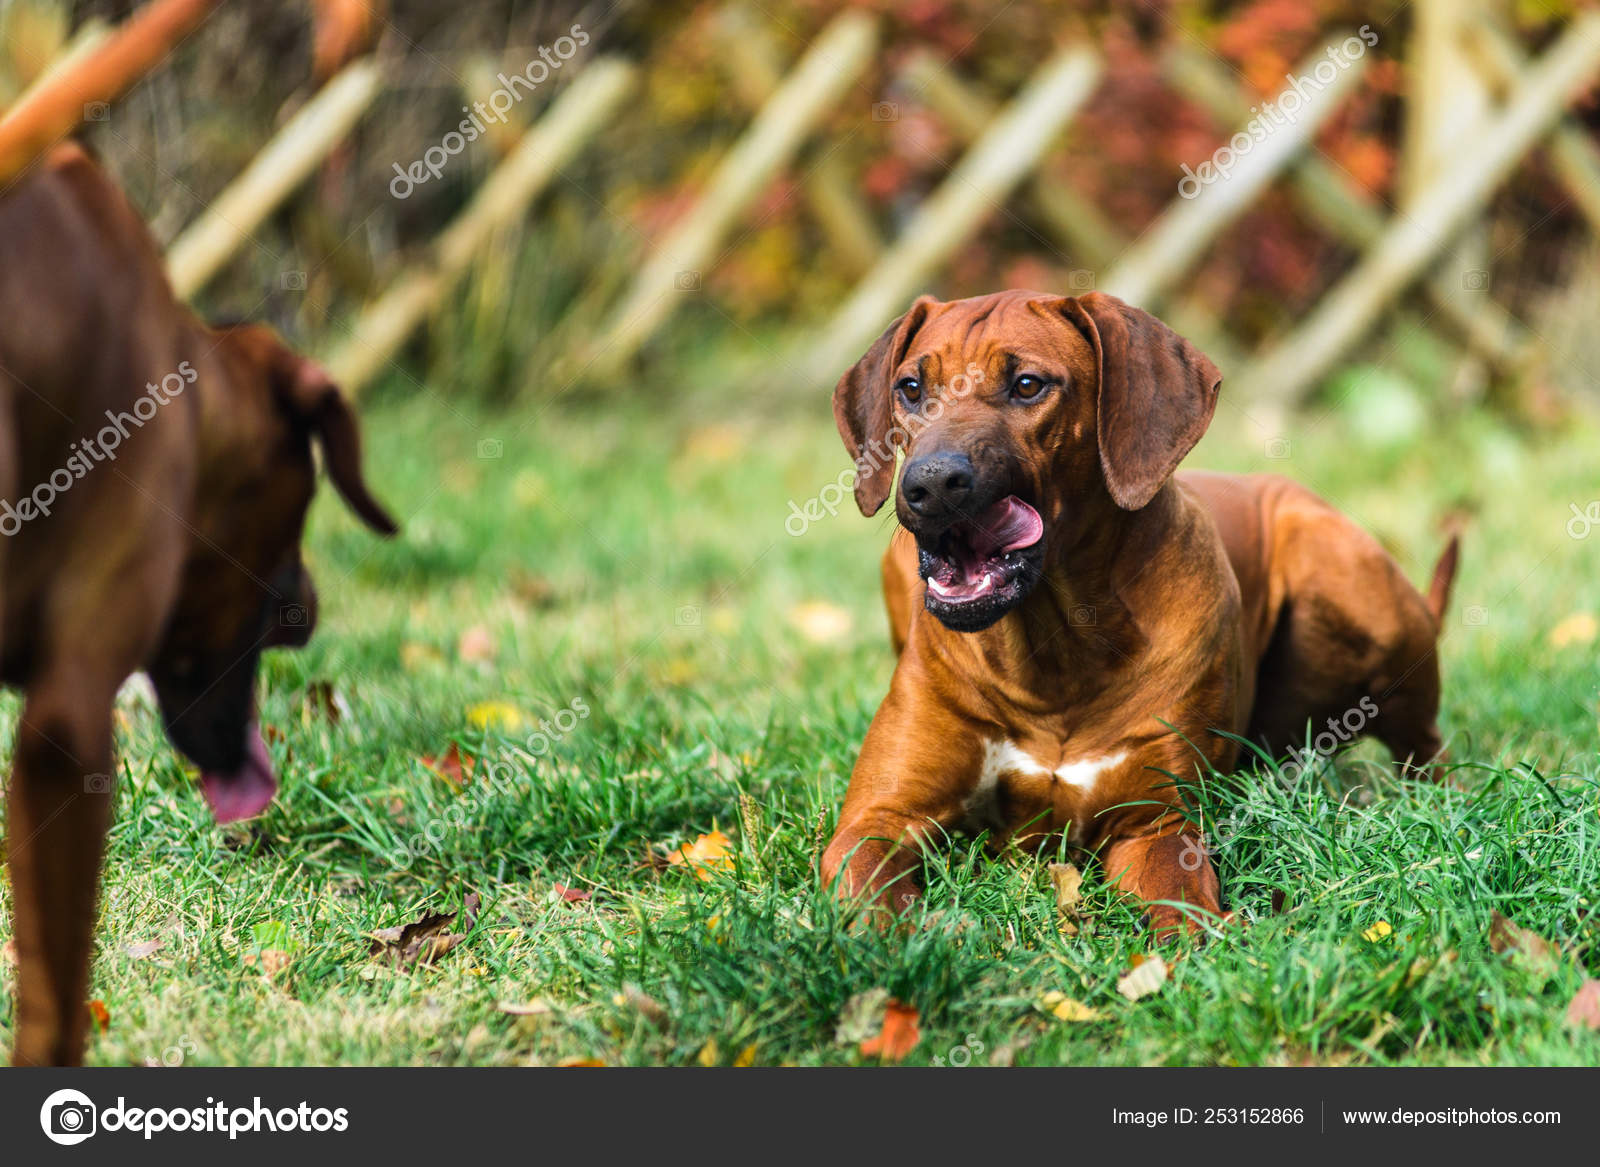 Two funny friendly Rhodesian Ridgeback dogs playing, running